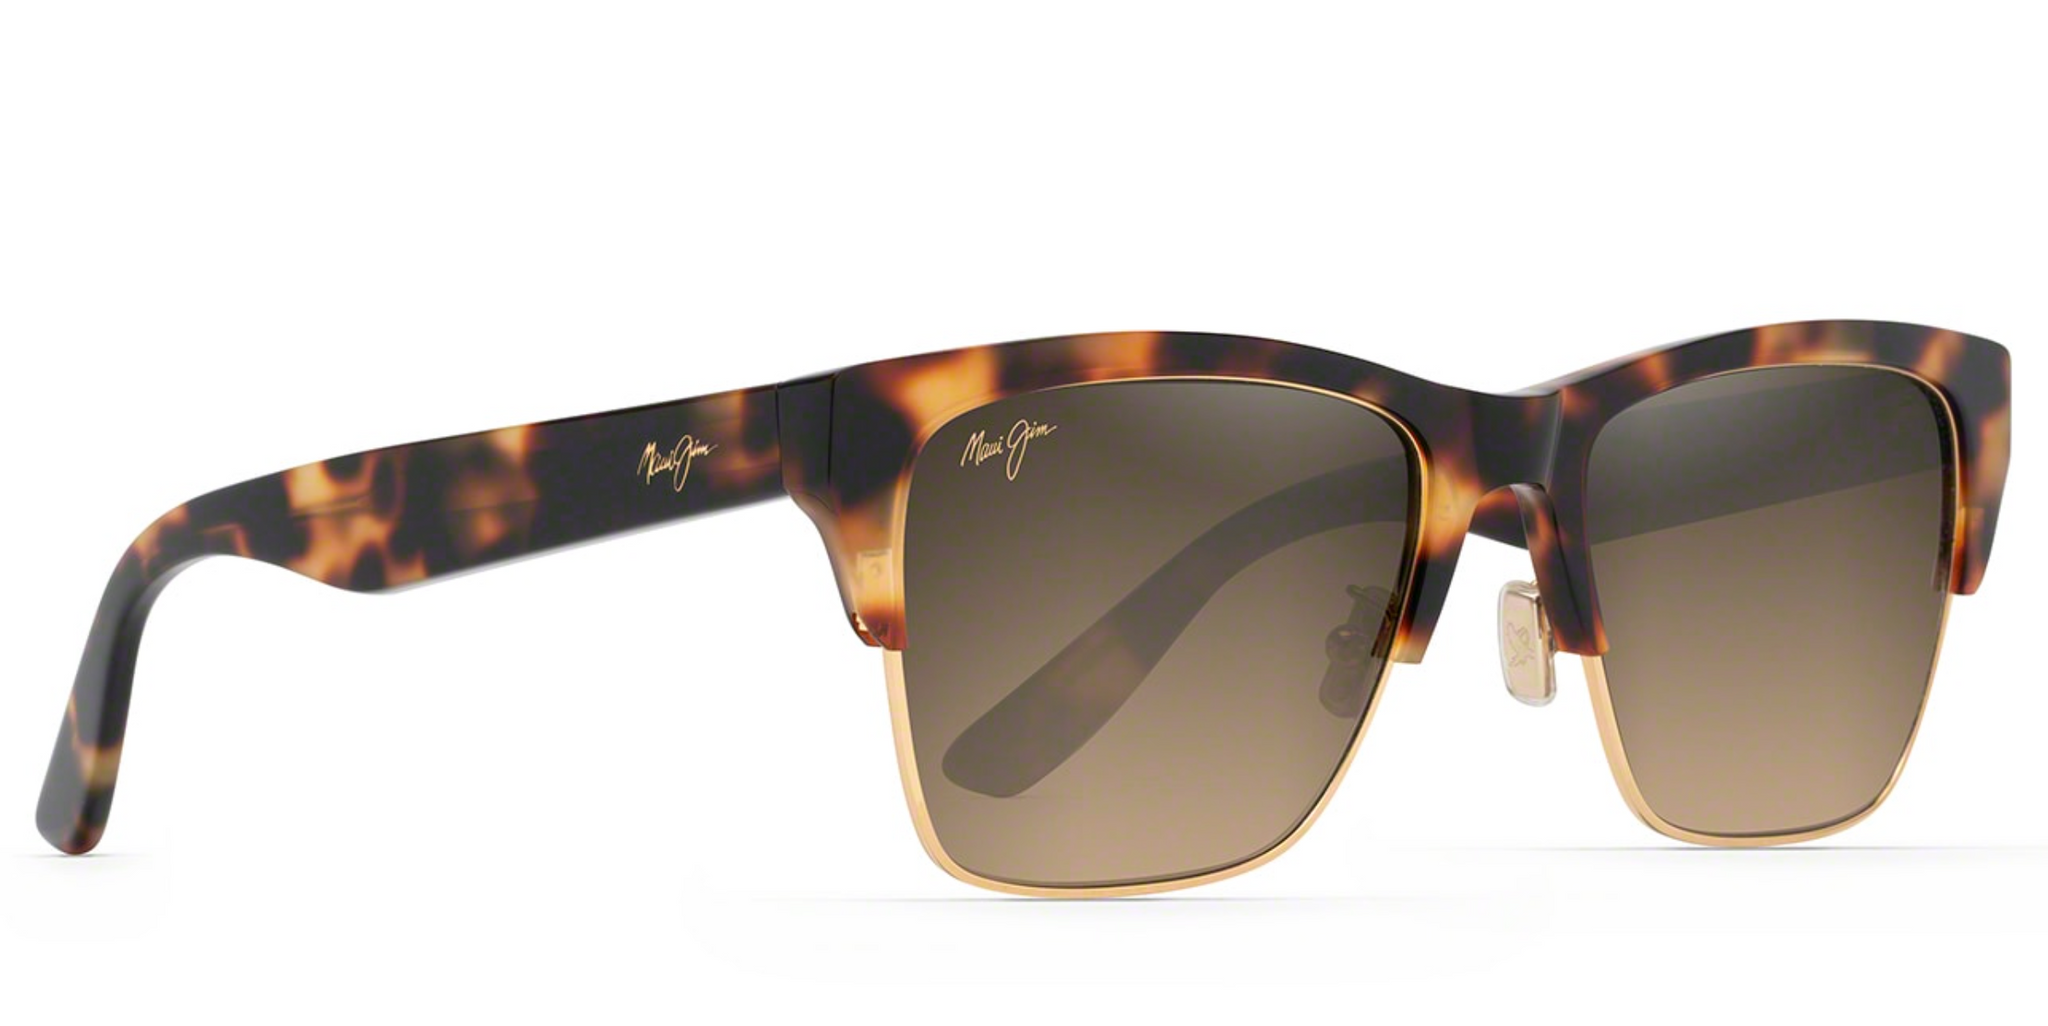 Maui Jim PERICO 853 Sunglasses:GS853-02, HS853-10, DBS853-03, DGS853-24F -  Flight Sunglasses